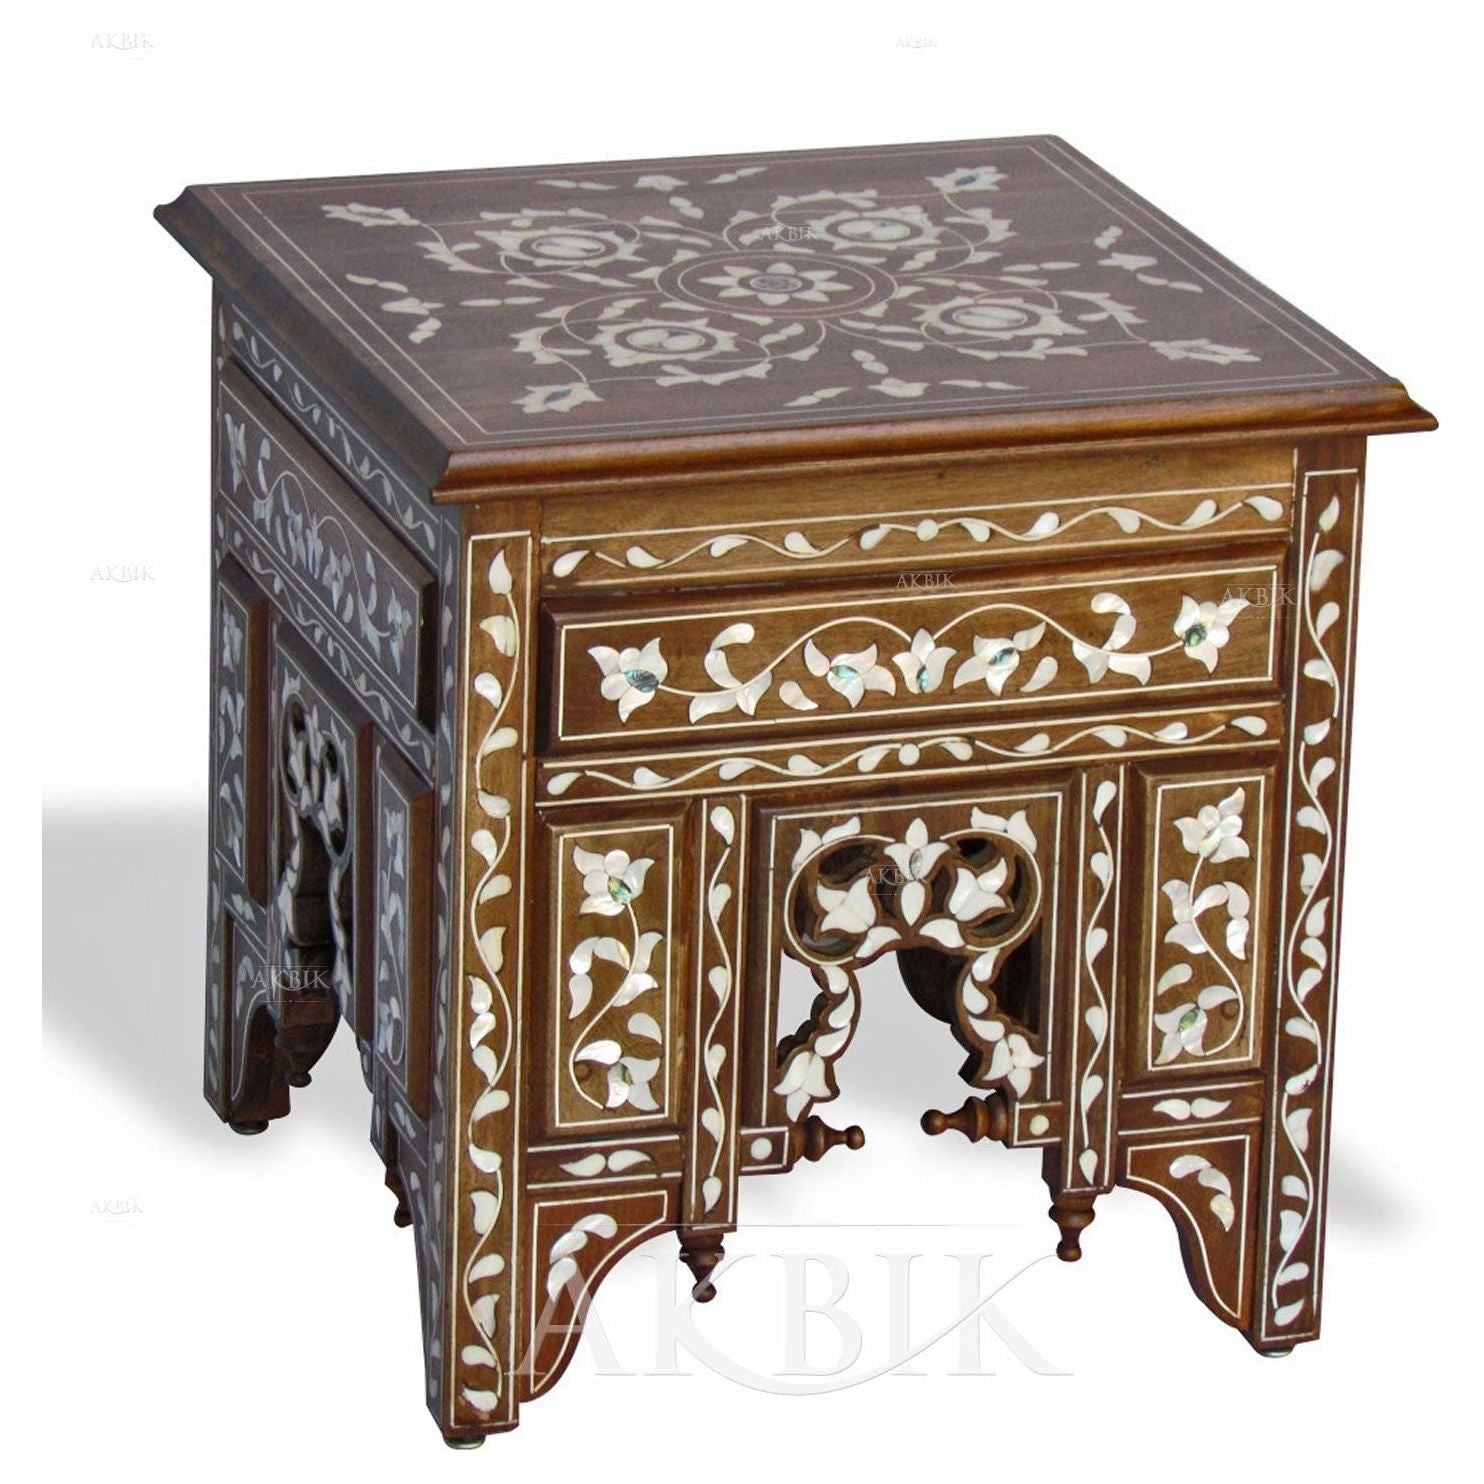 MALLORCA SIDE TABLE - AKBIK Furniture & Design